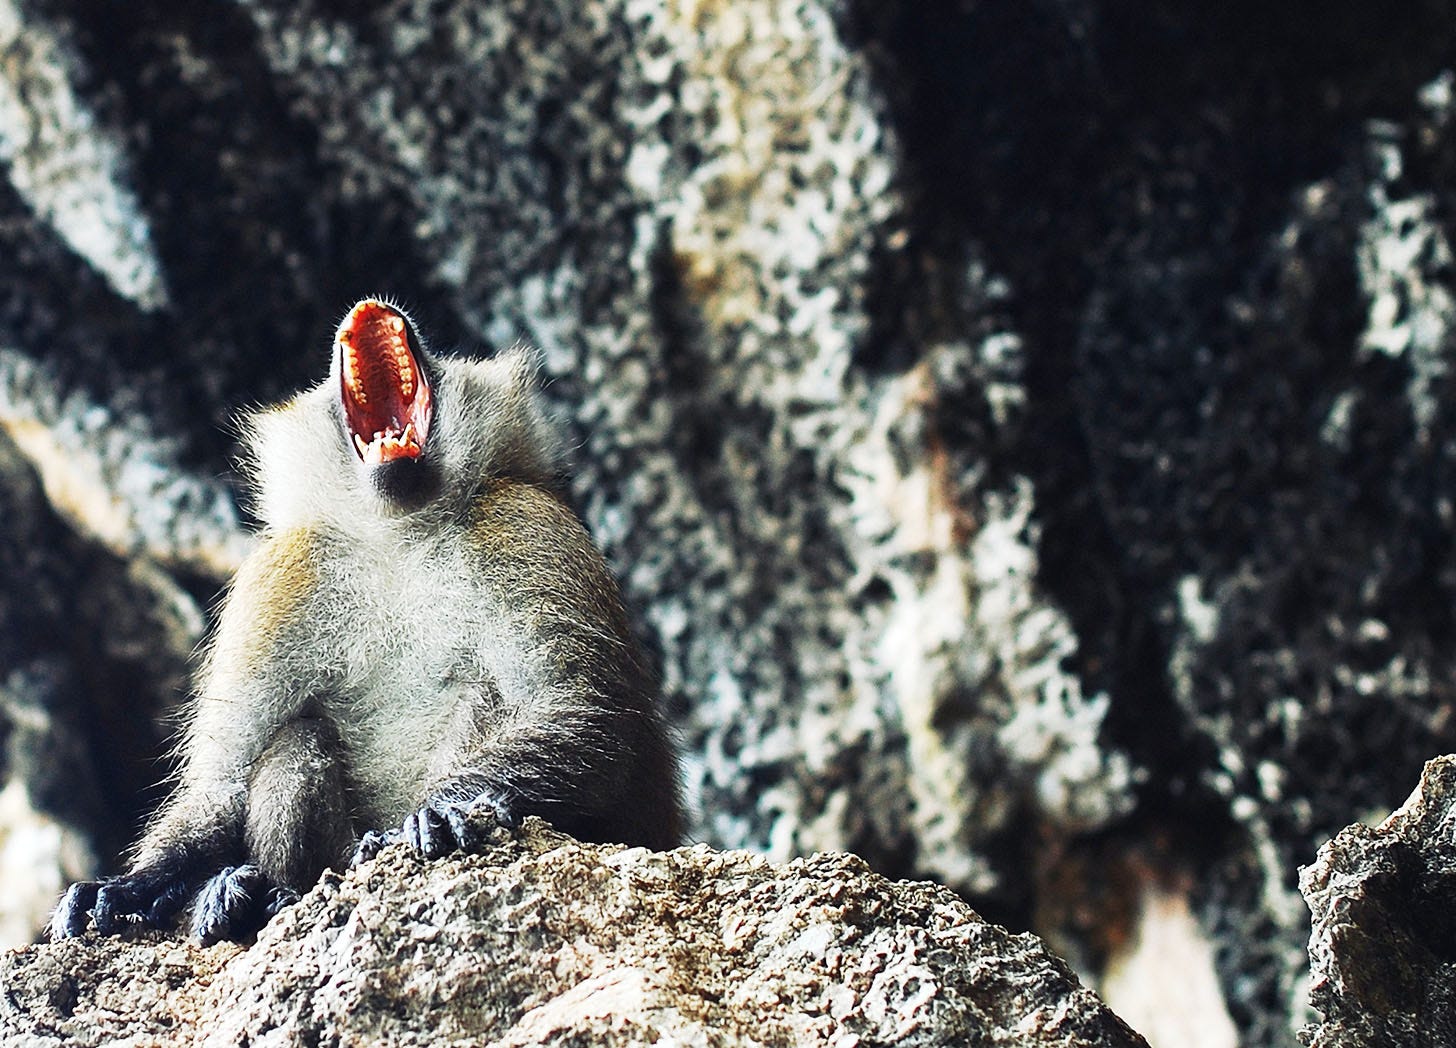 Monkey sitting on a rock screaming in frustration